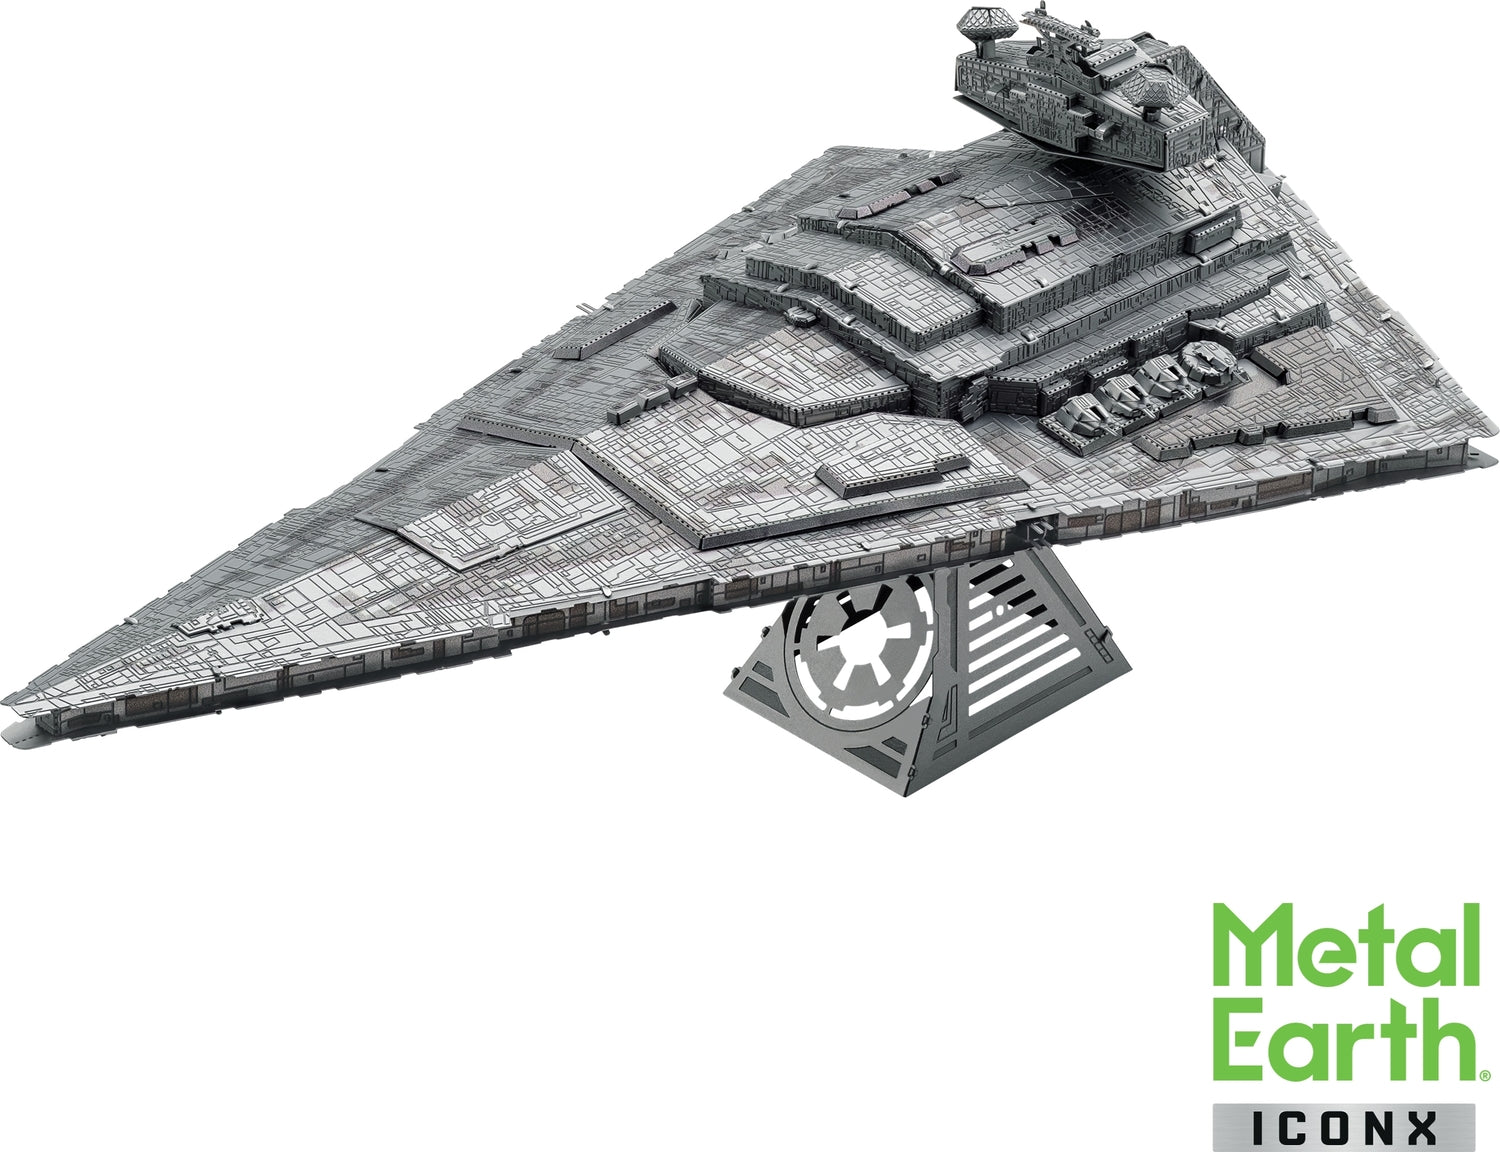 ICONX: Imperial Star Destroyer